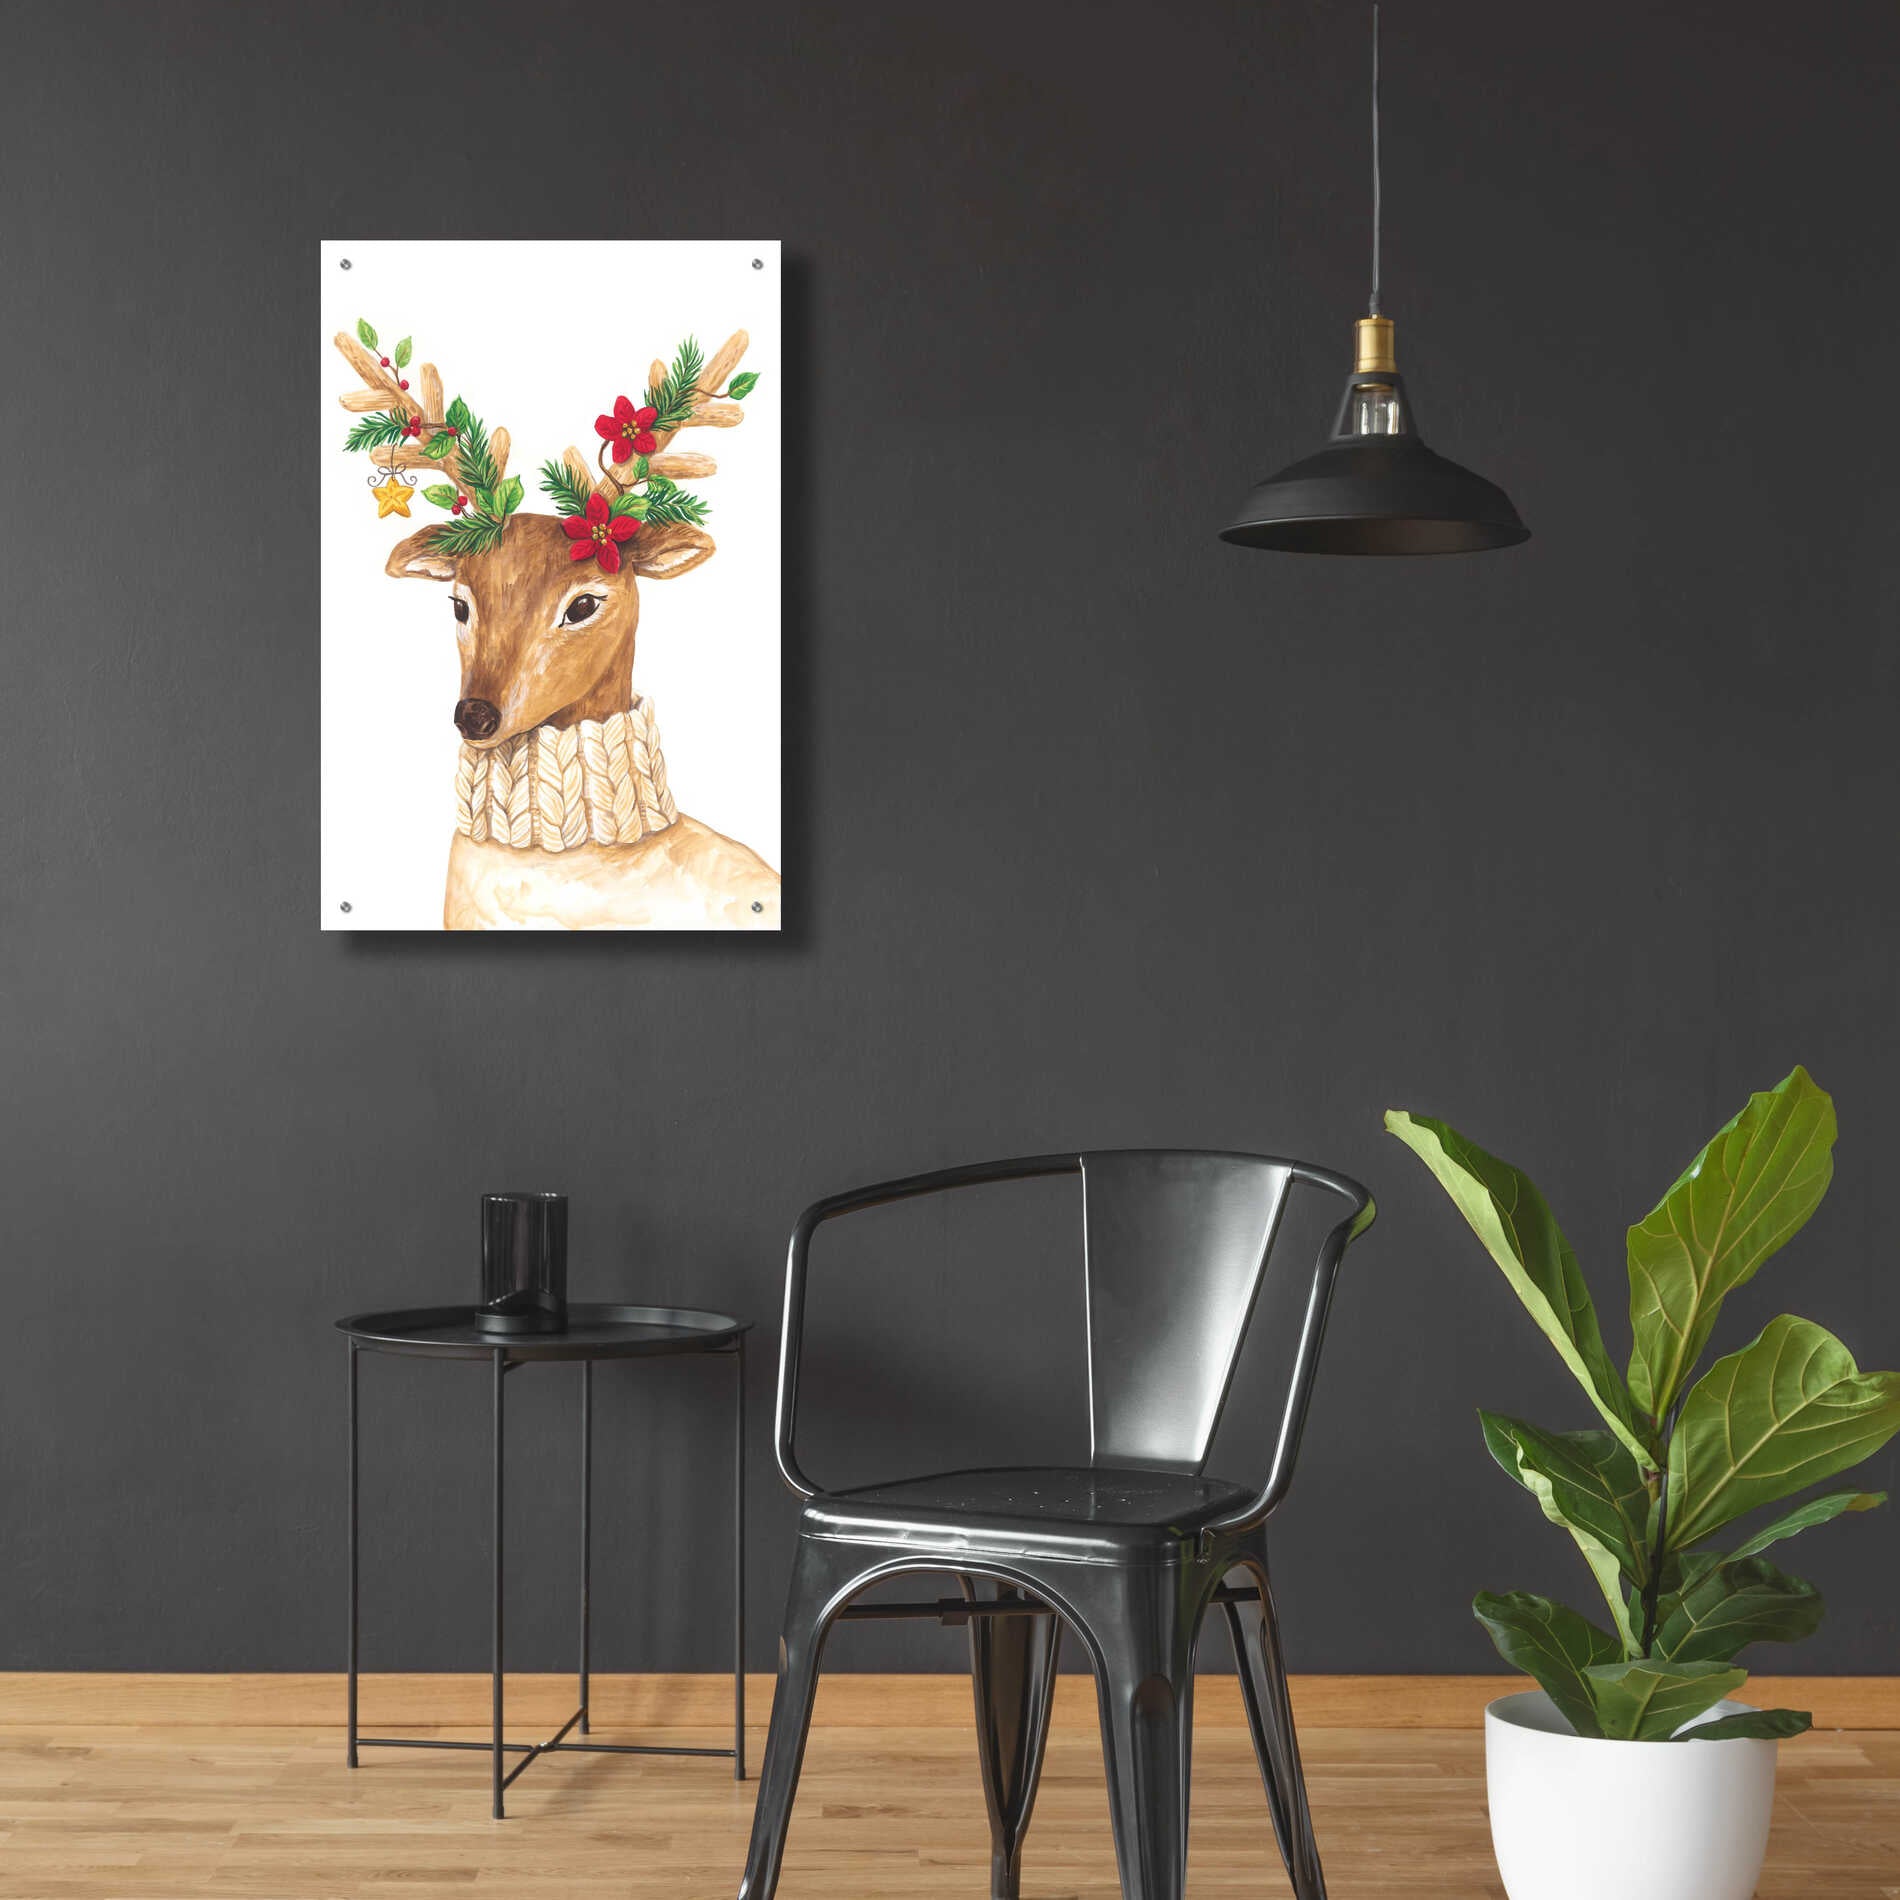 Epic Art 'Christmas Deer' by Diane Kater, Acrylic Glass Wall Art,24x36